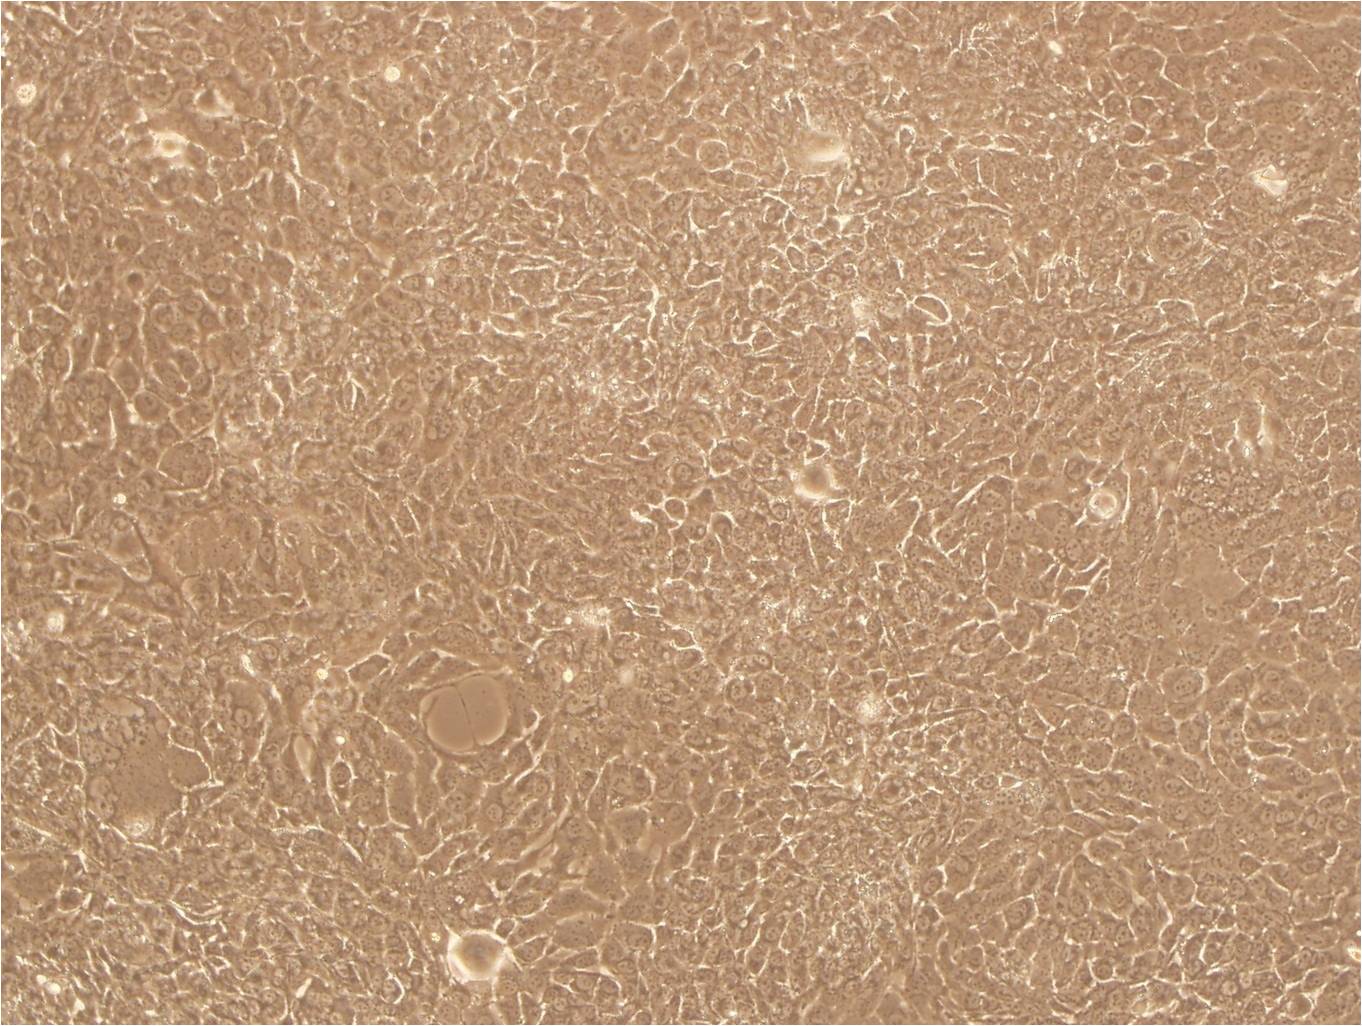 IMR-32:人神经母细胞瘤复苏细胞(提供STR鉴定图谱),IMR-32